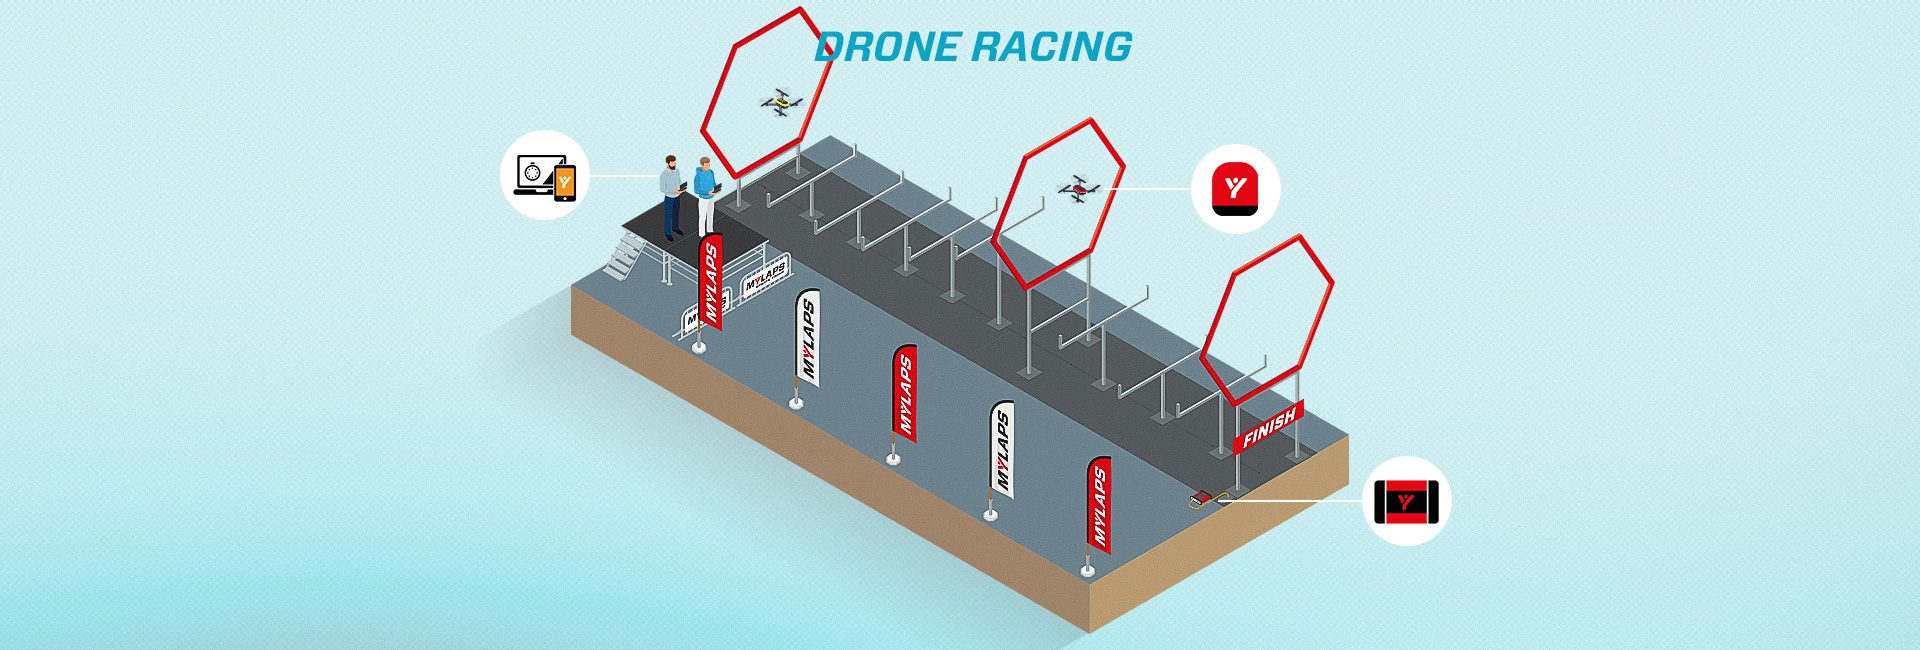 RC & Drone Racing